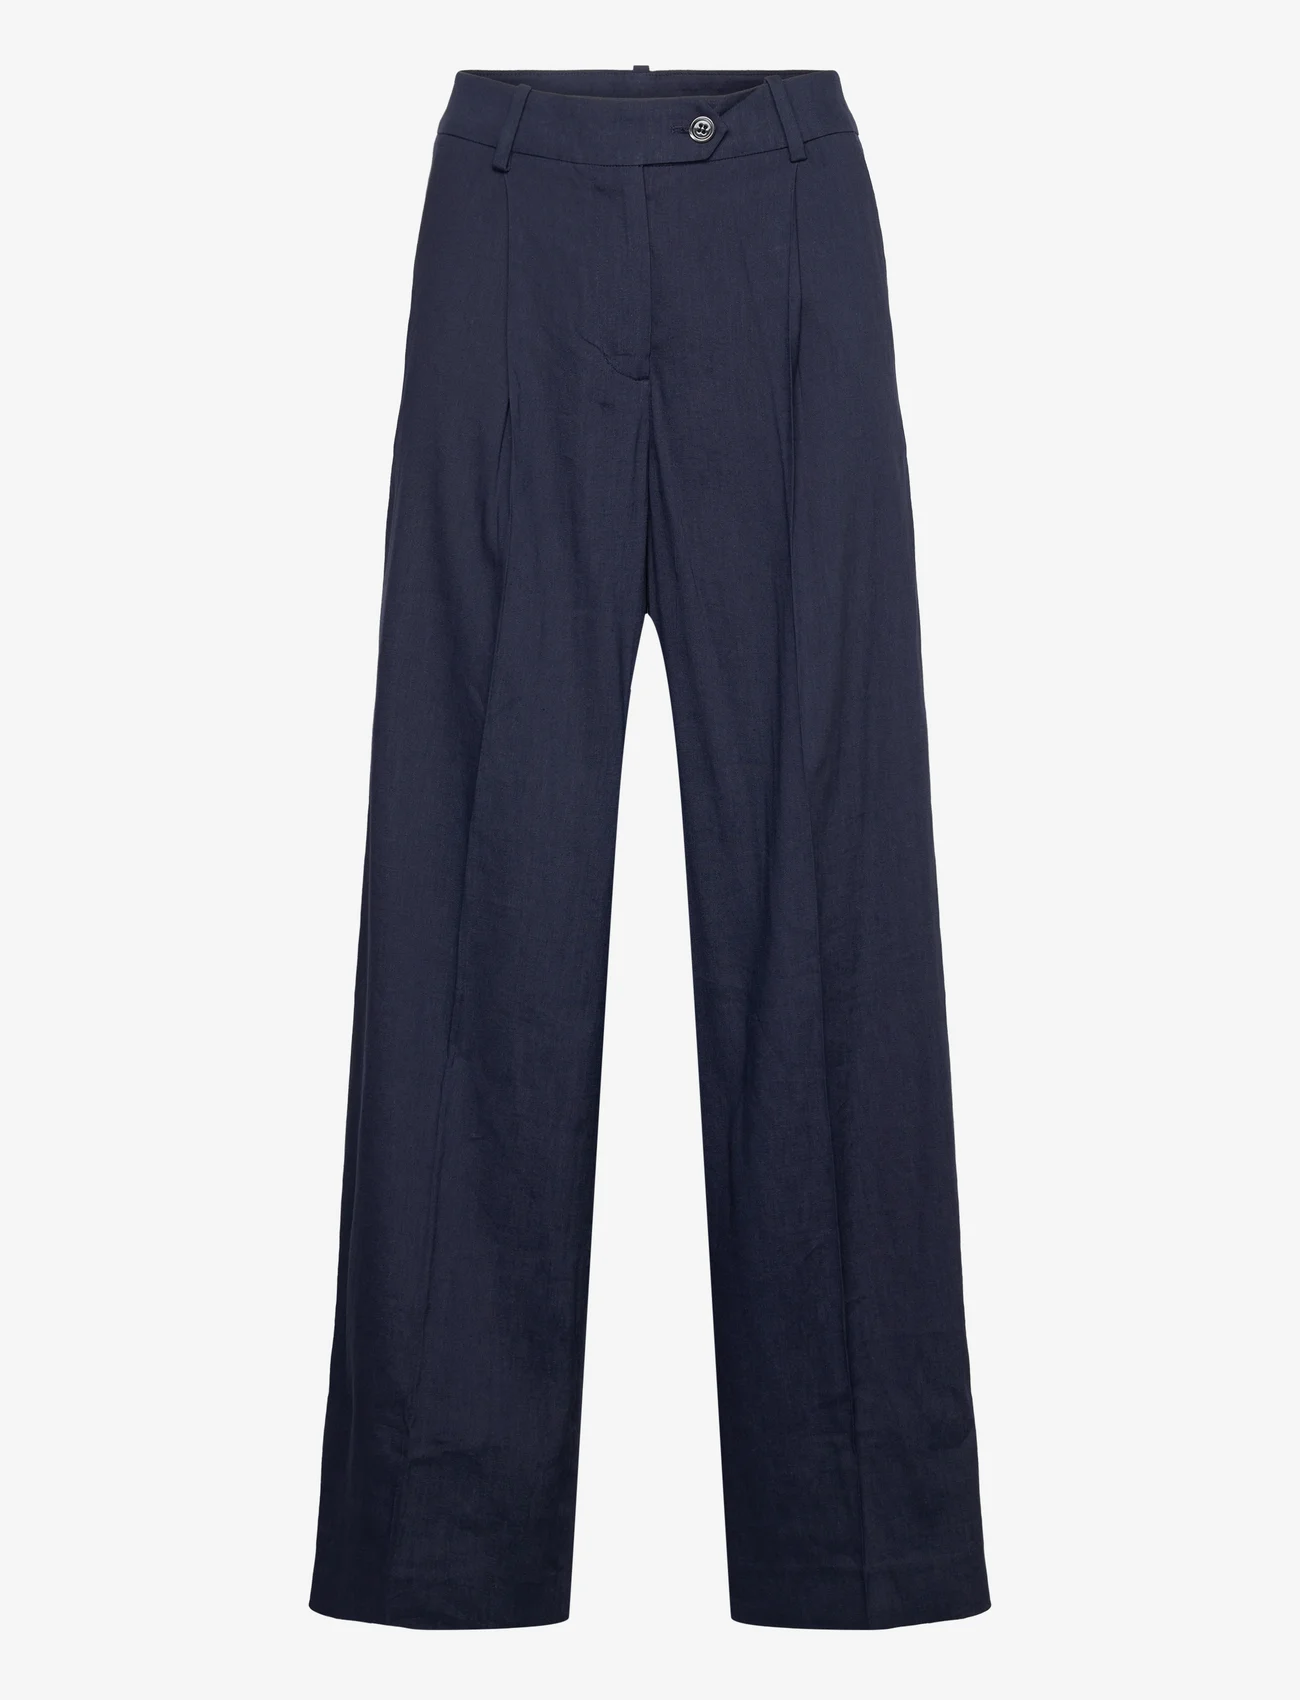 GANT - WIDE STRETCH LINEN PANT - spodnie lniane - evening blue - 0